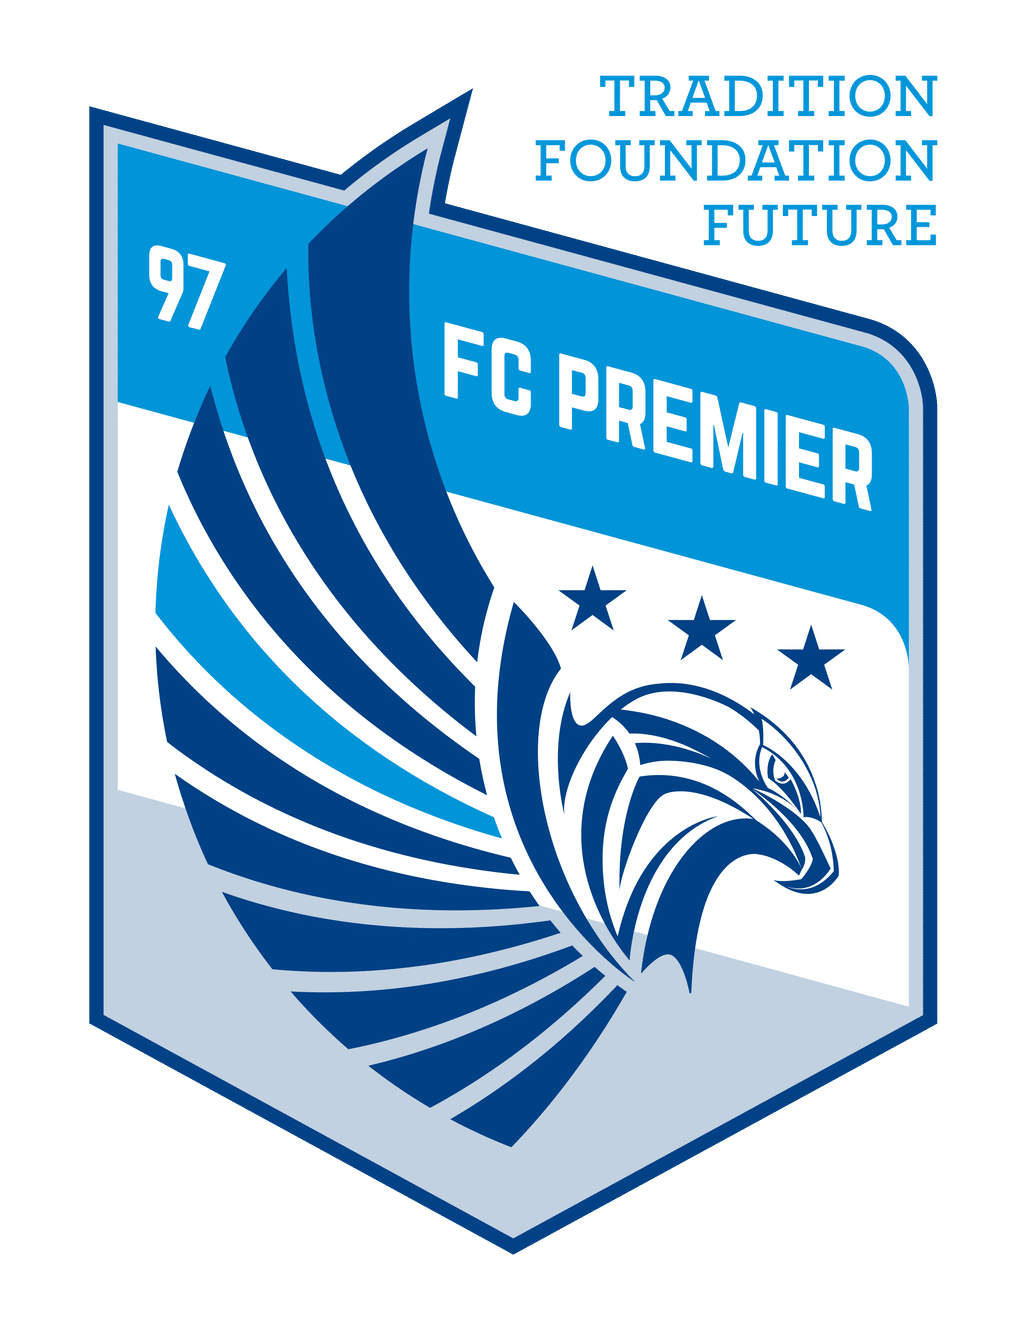 FC Premier soccer club injury prevention partnership